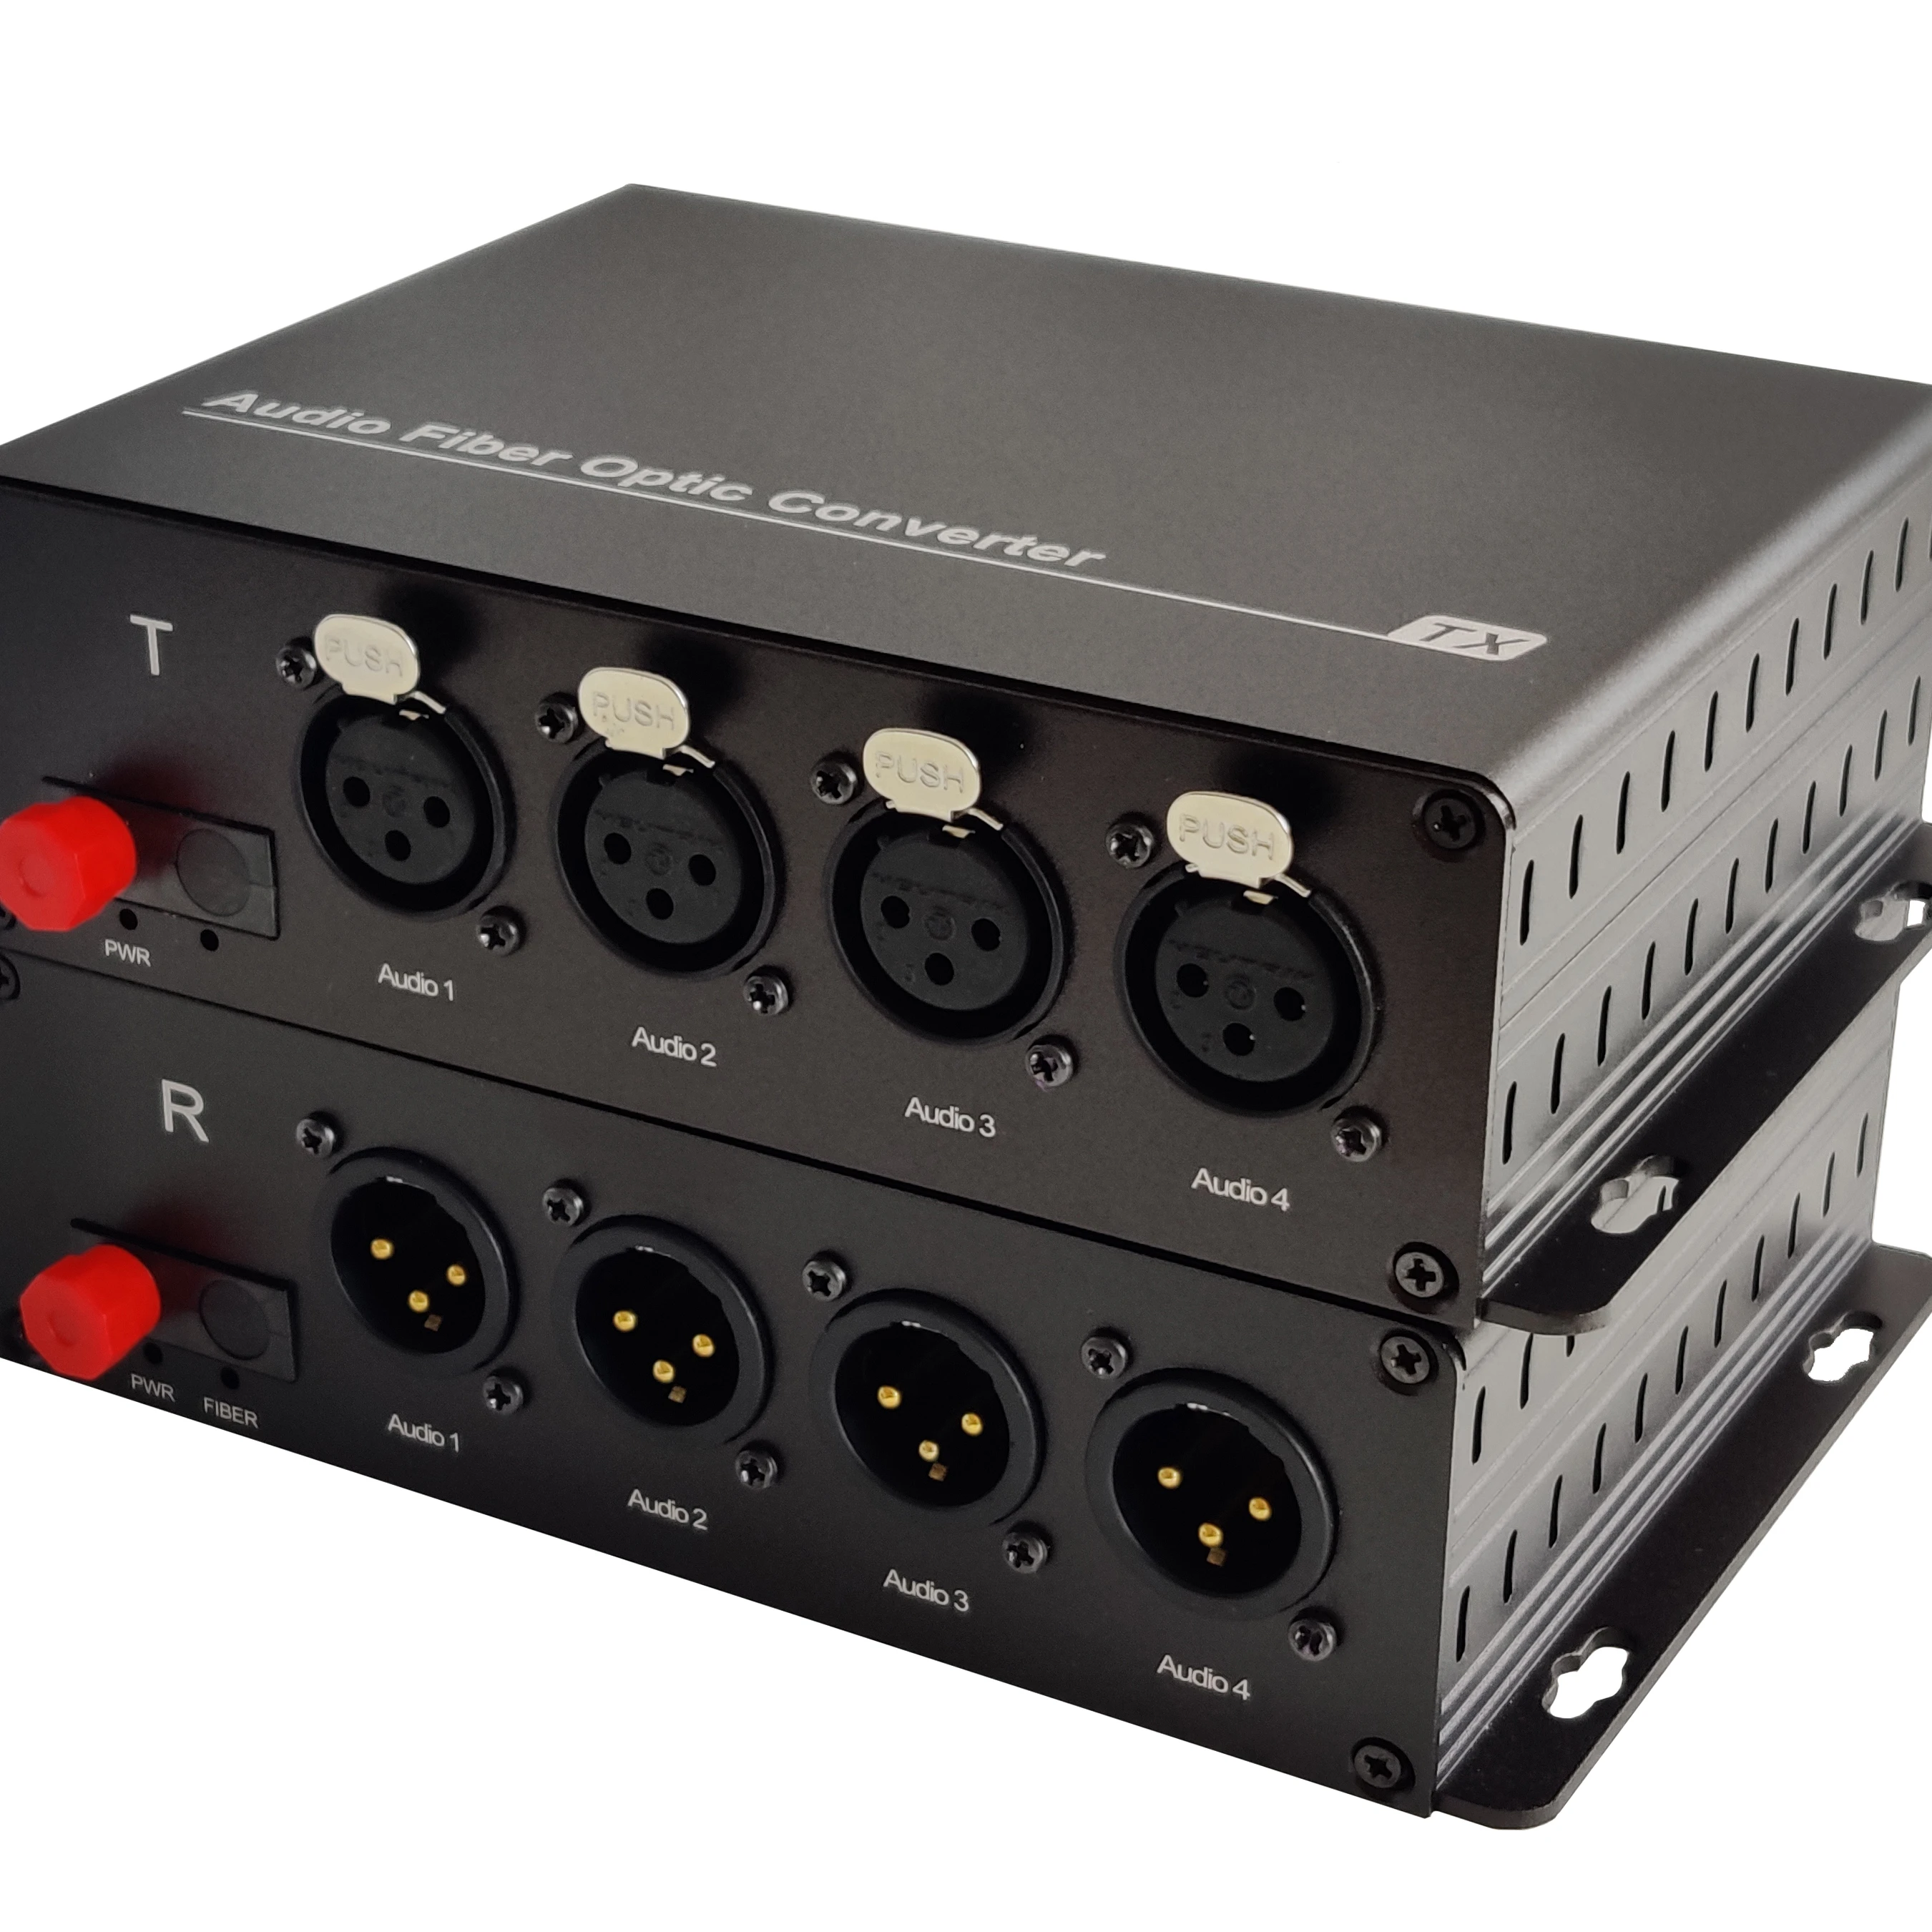 4 CHS Xlr Balanced Audio To Fiber Converter 2 channel bi directional xlr audio to fiber converter balanced audio over fiber optical extender transceiver